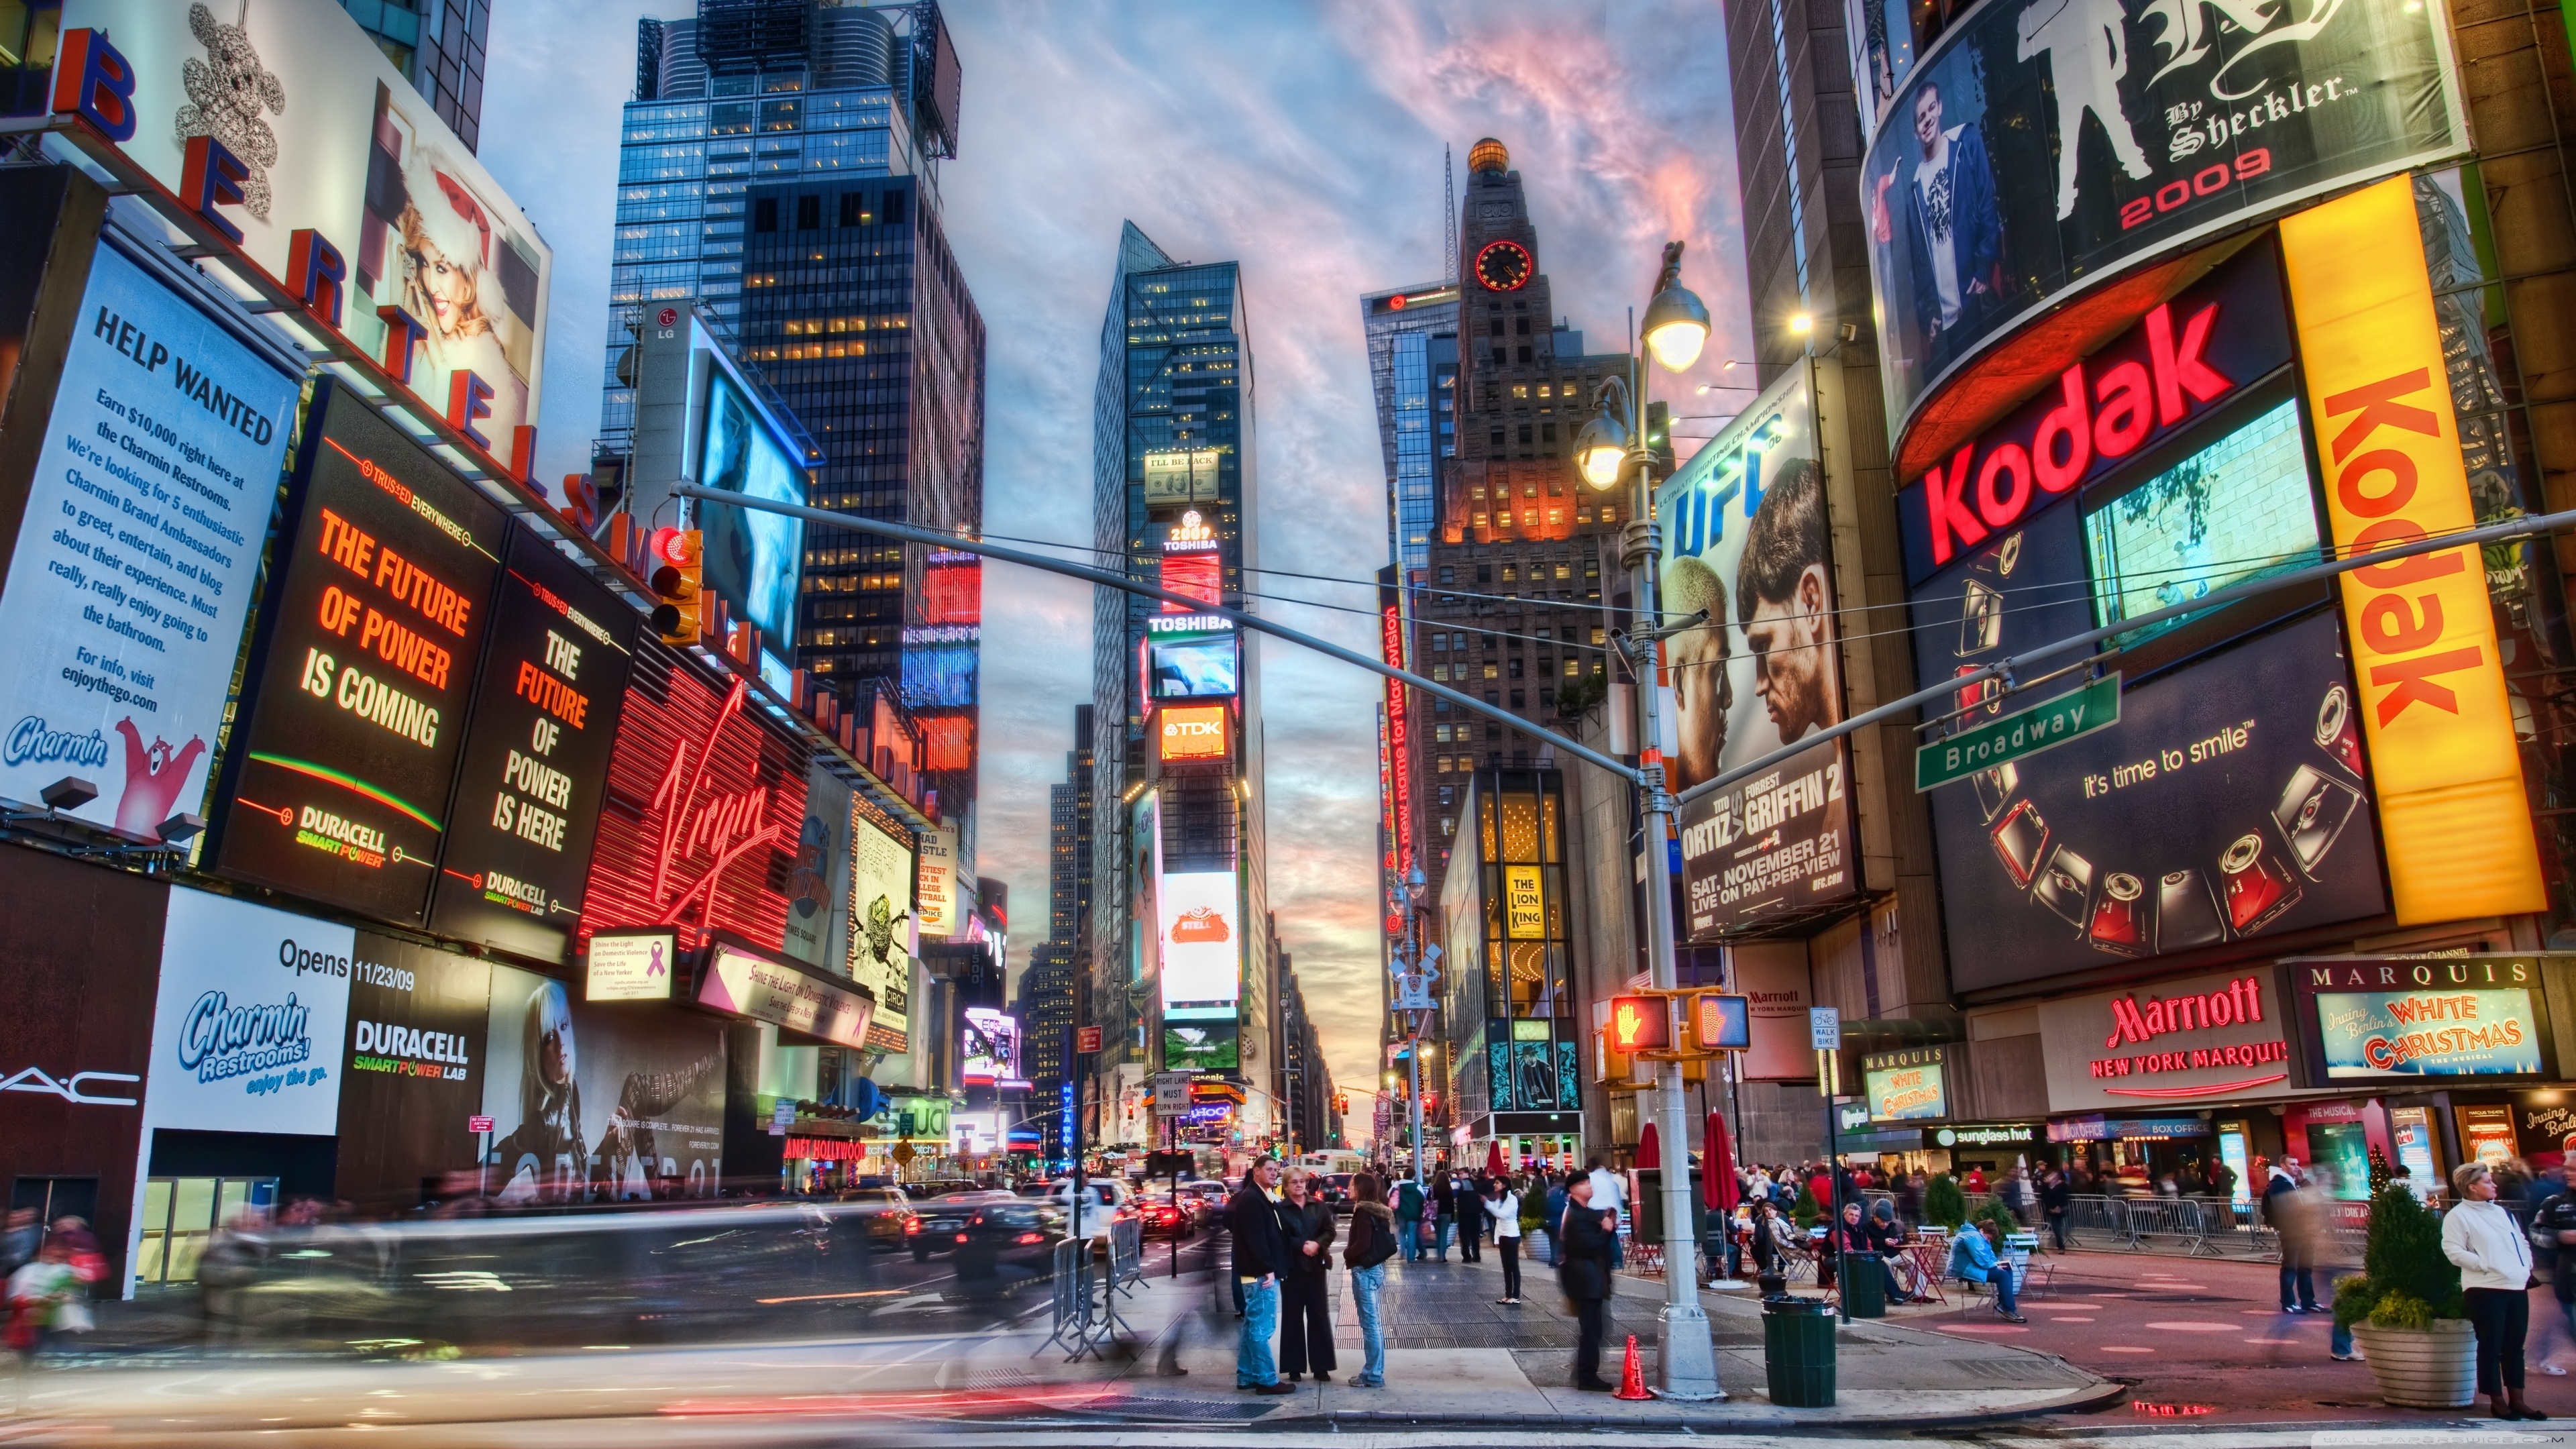 New York: Times Square, Neighbourhood, Billboards, American city. 3840x2160 4K Wallpaper.